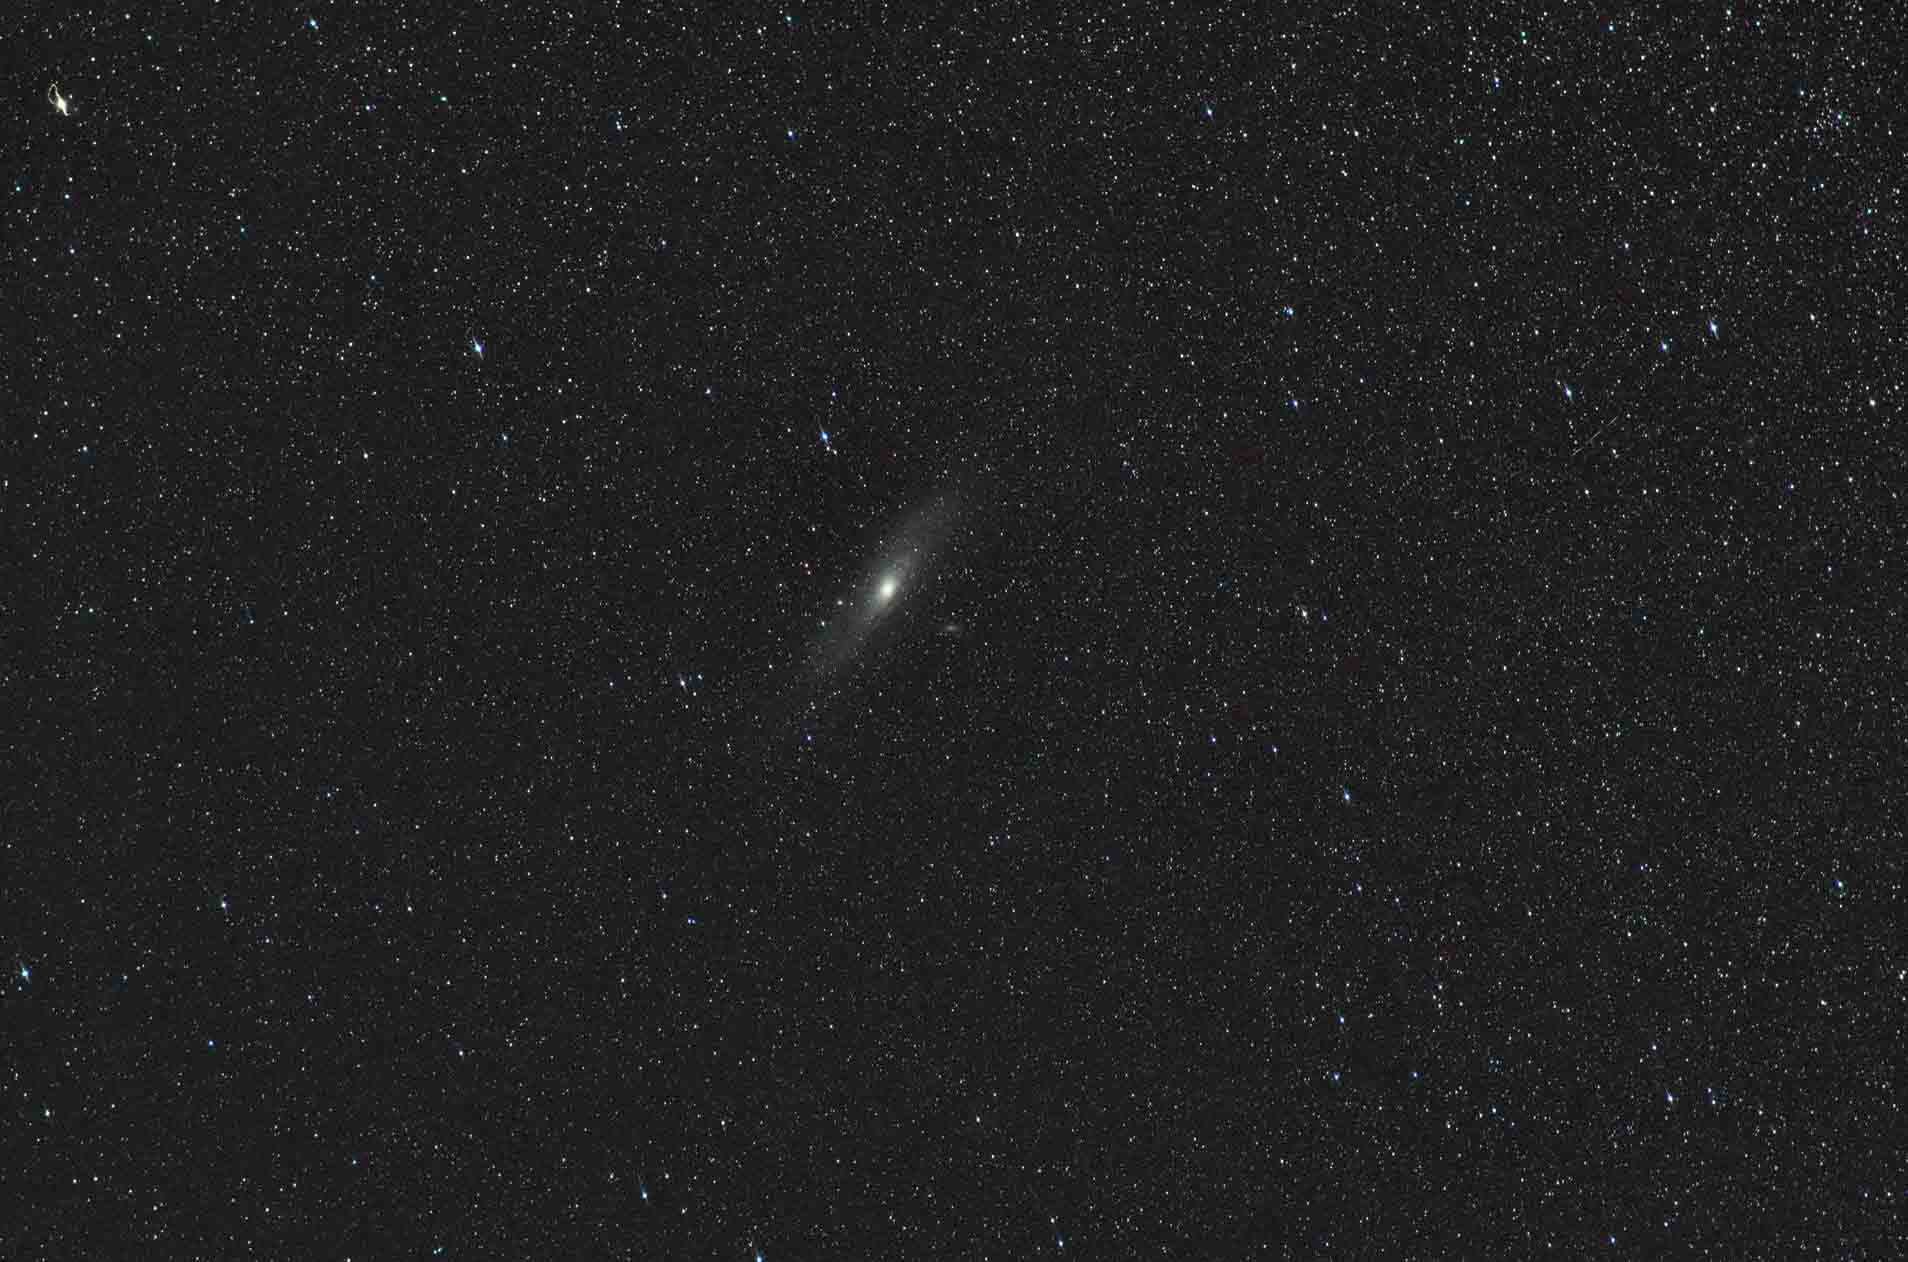 20200124-20200125 Messier 31, or Andromeda Galaxy